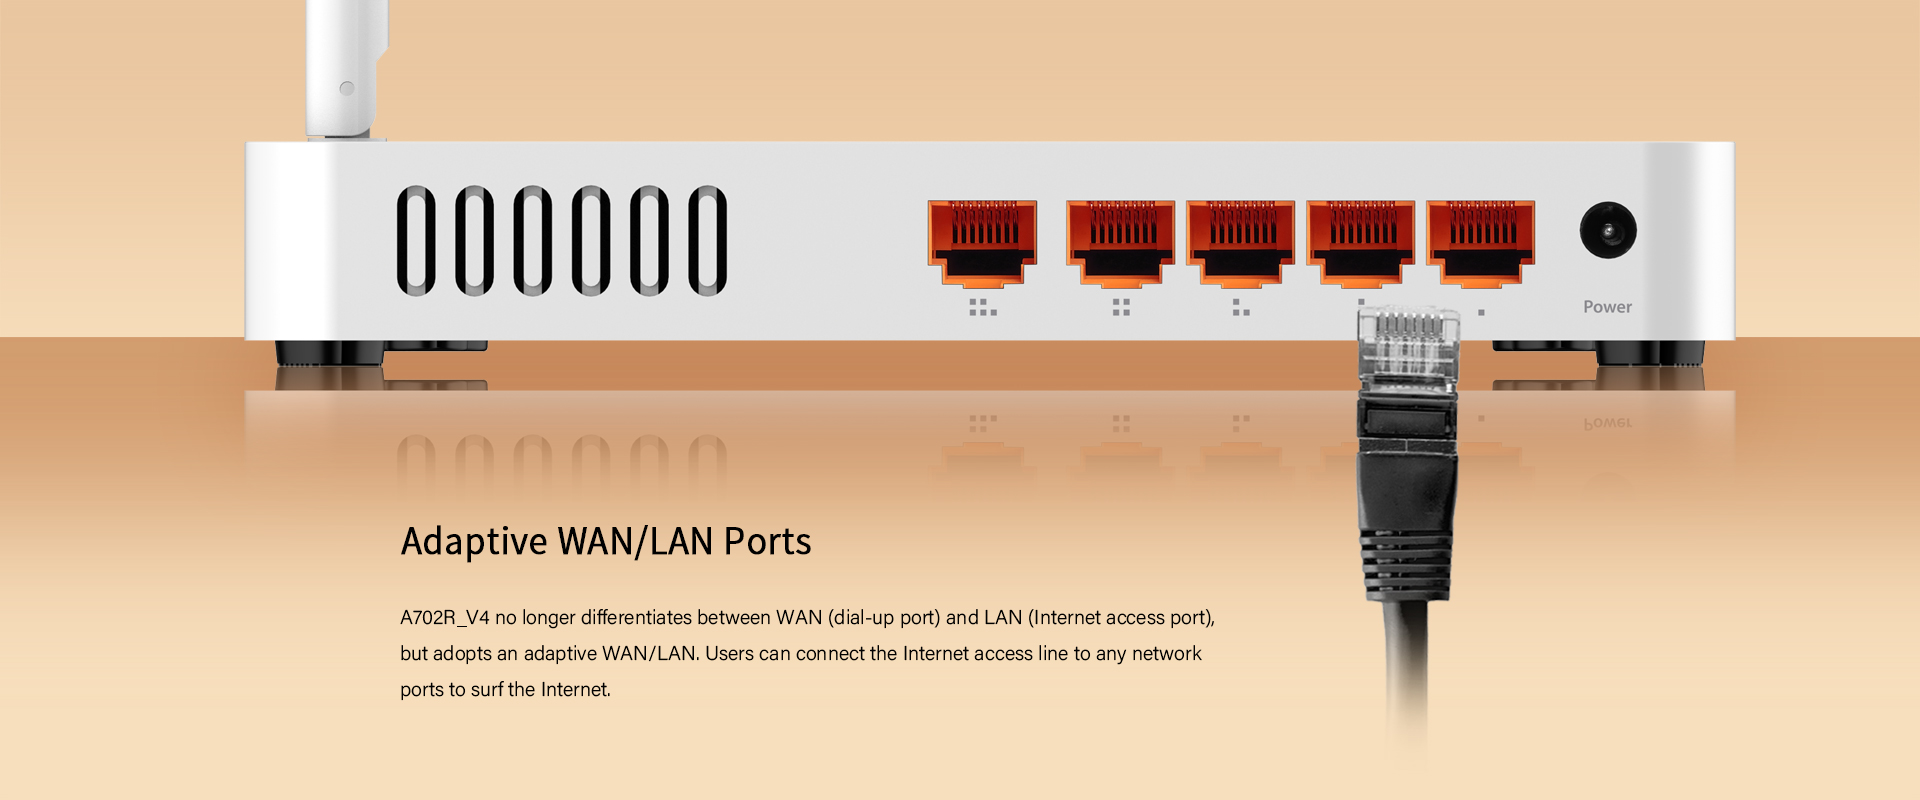 Adaptive WAN/LAN Ports 